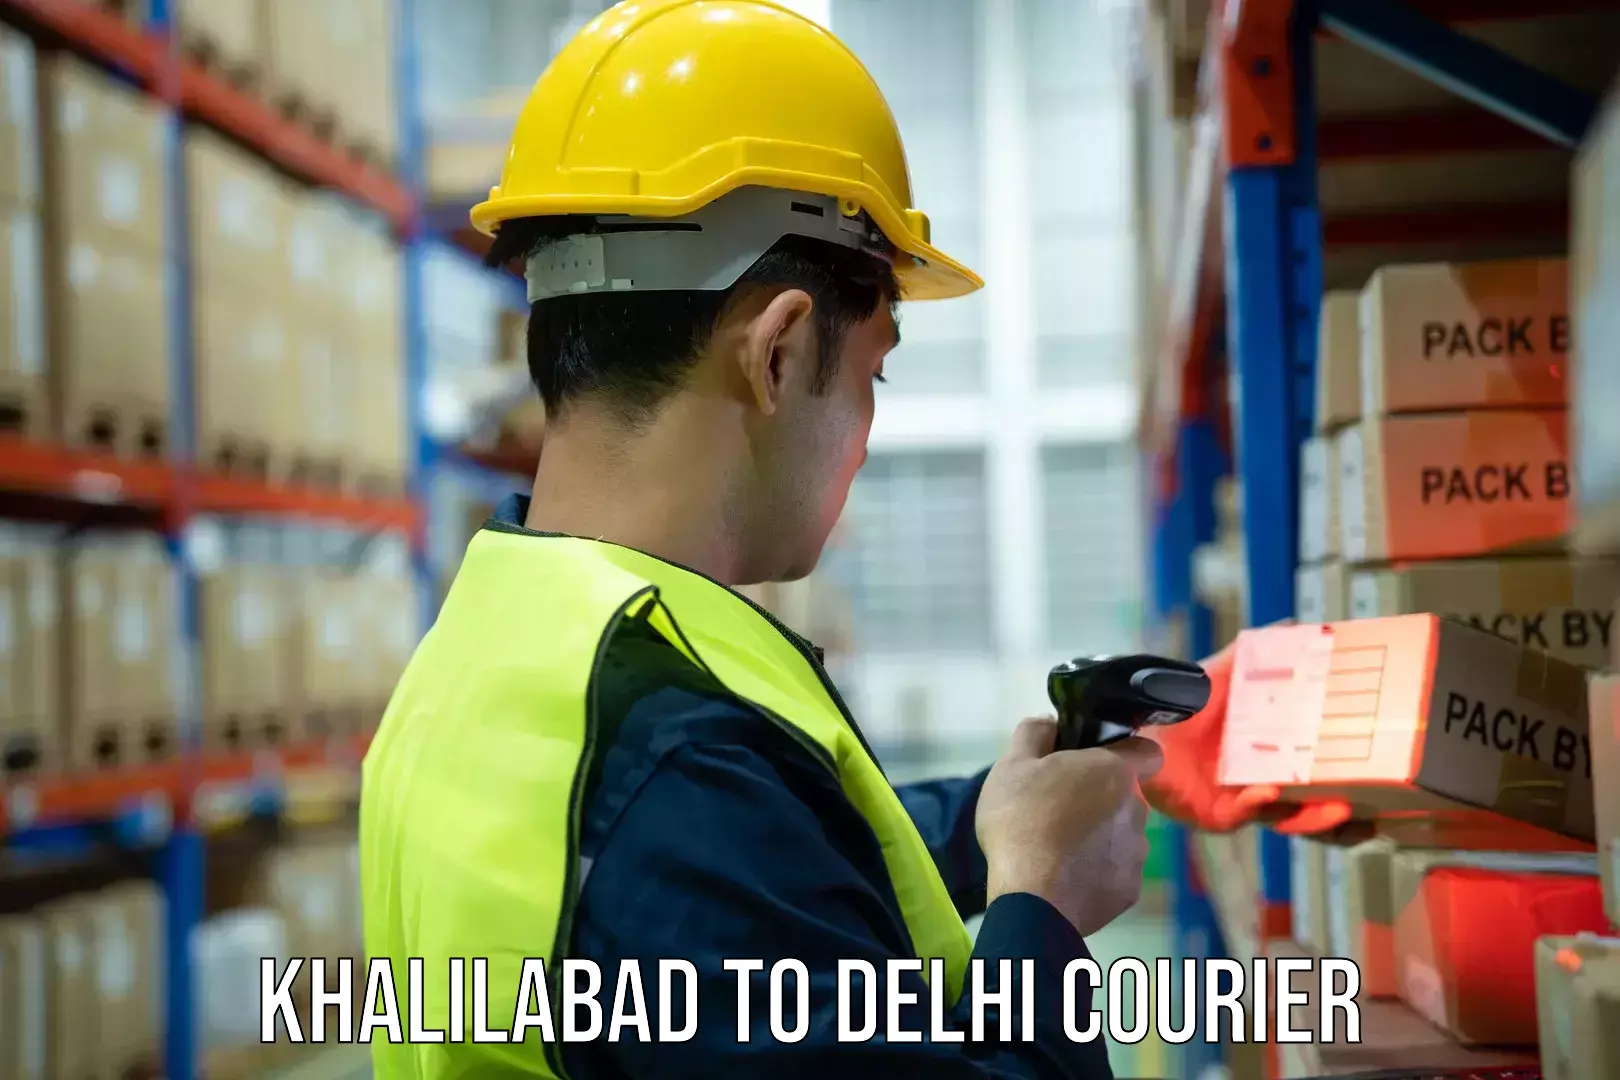 Courier service innovation Khalilabad to Delhi